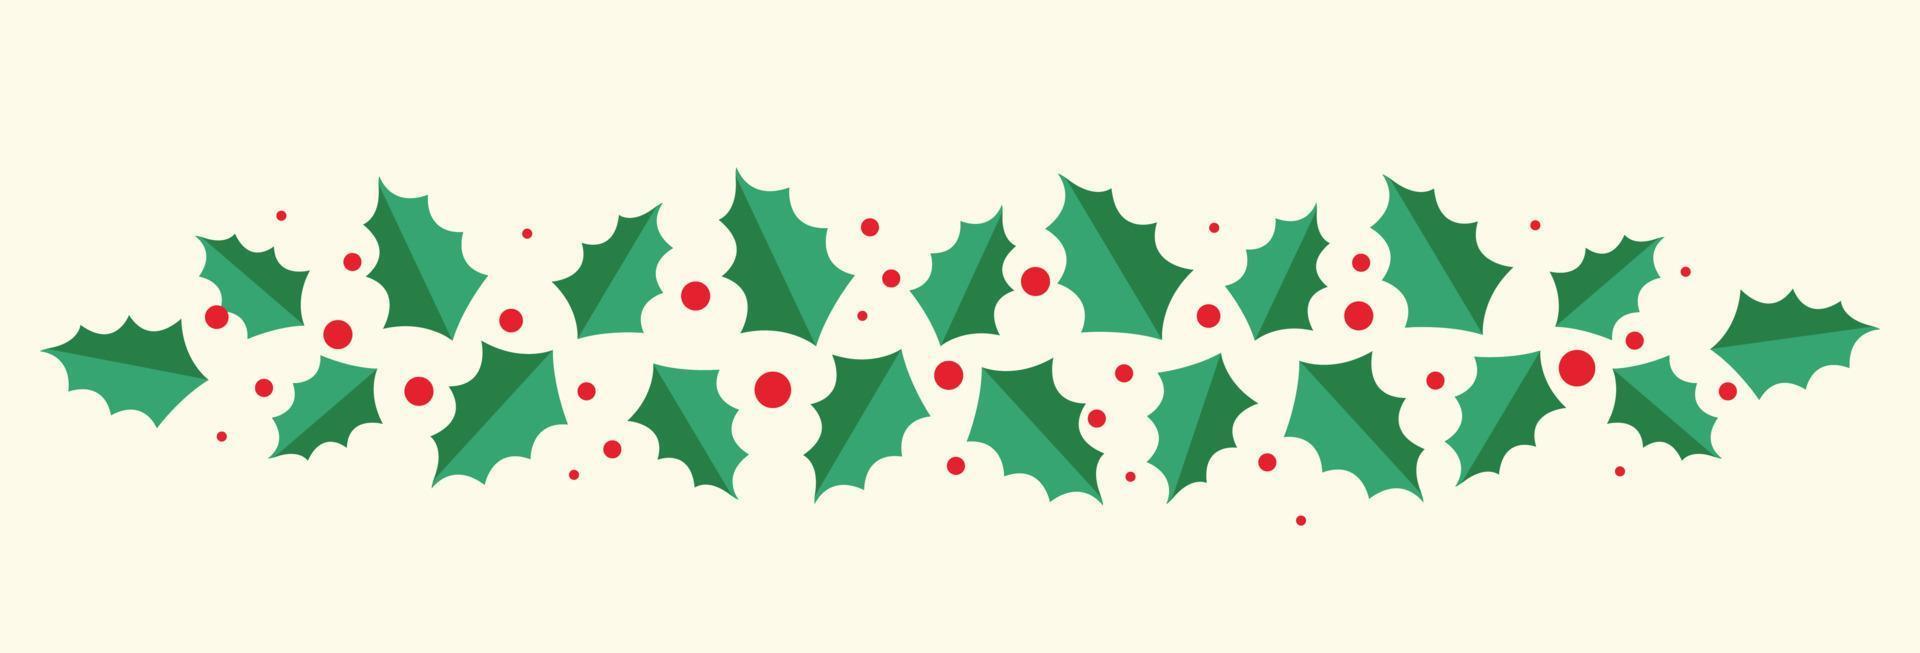 Christmas wreath leafs banner vector